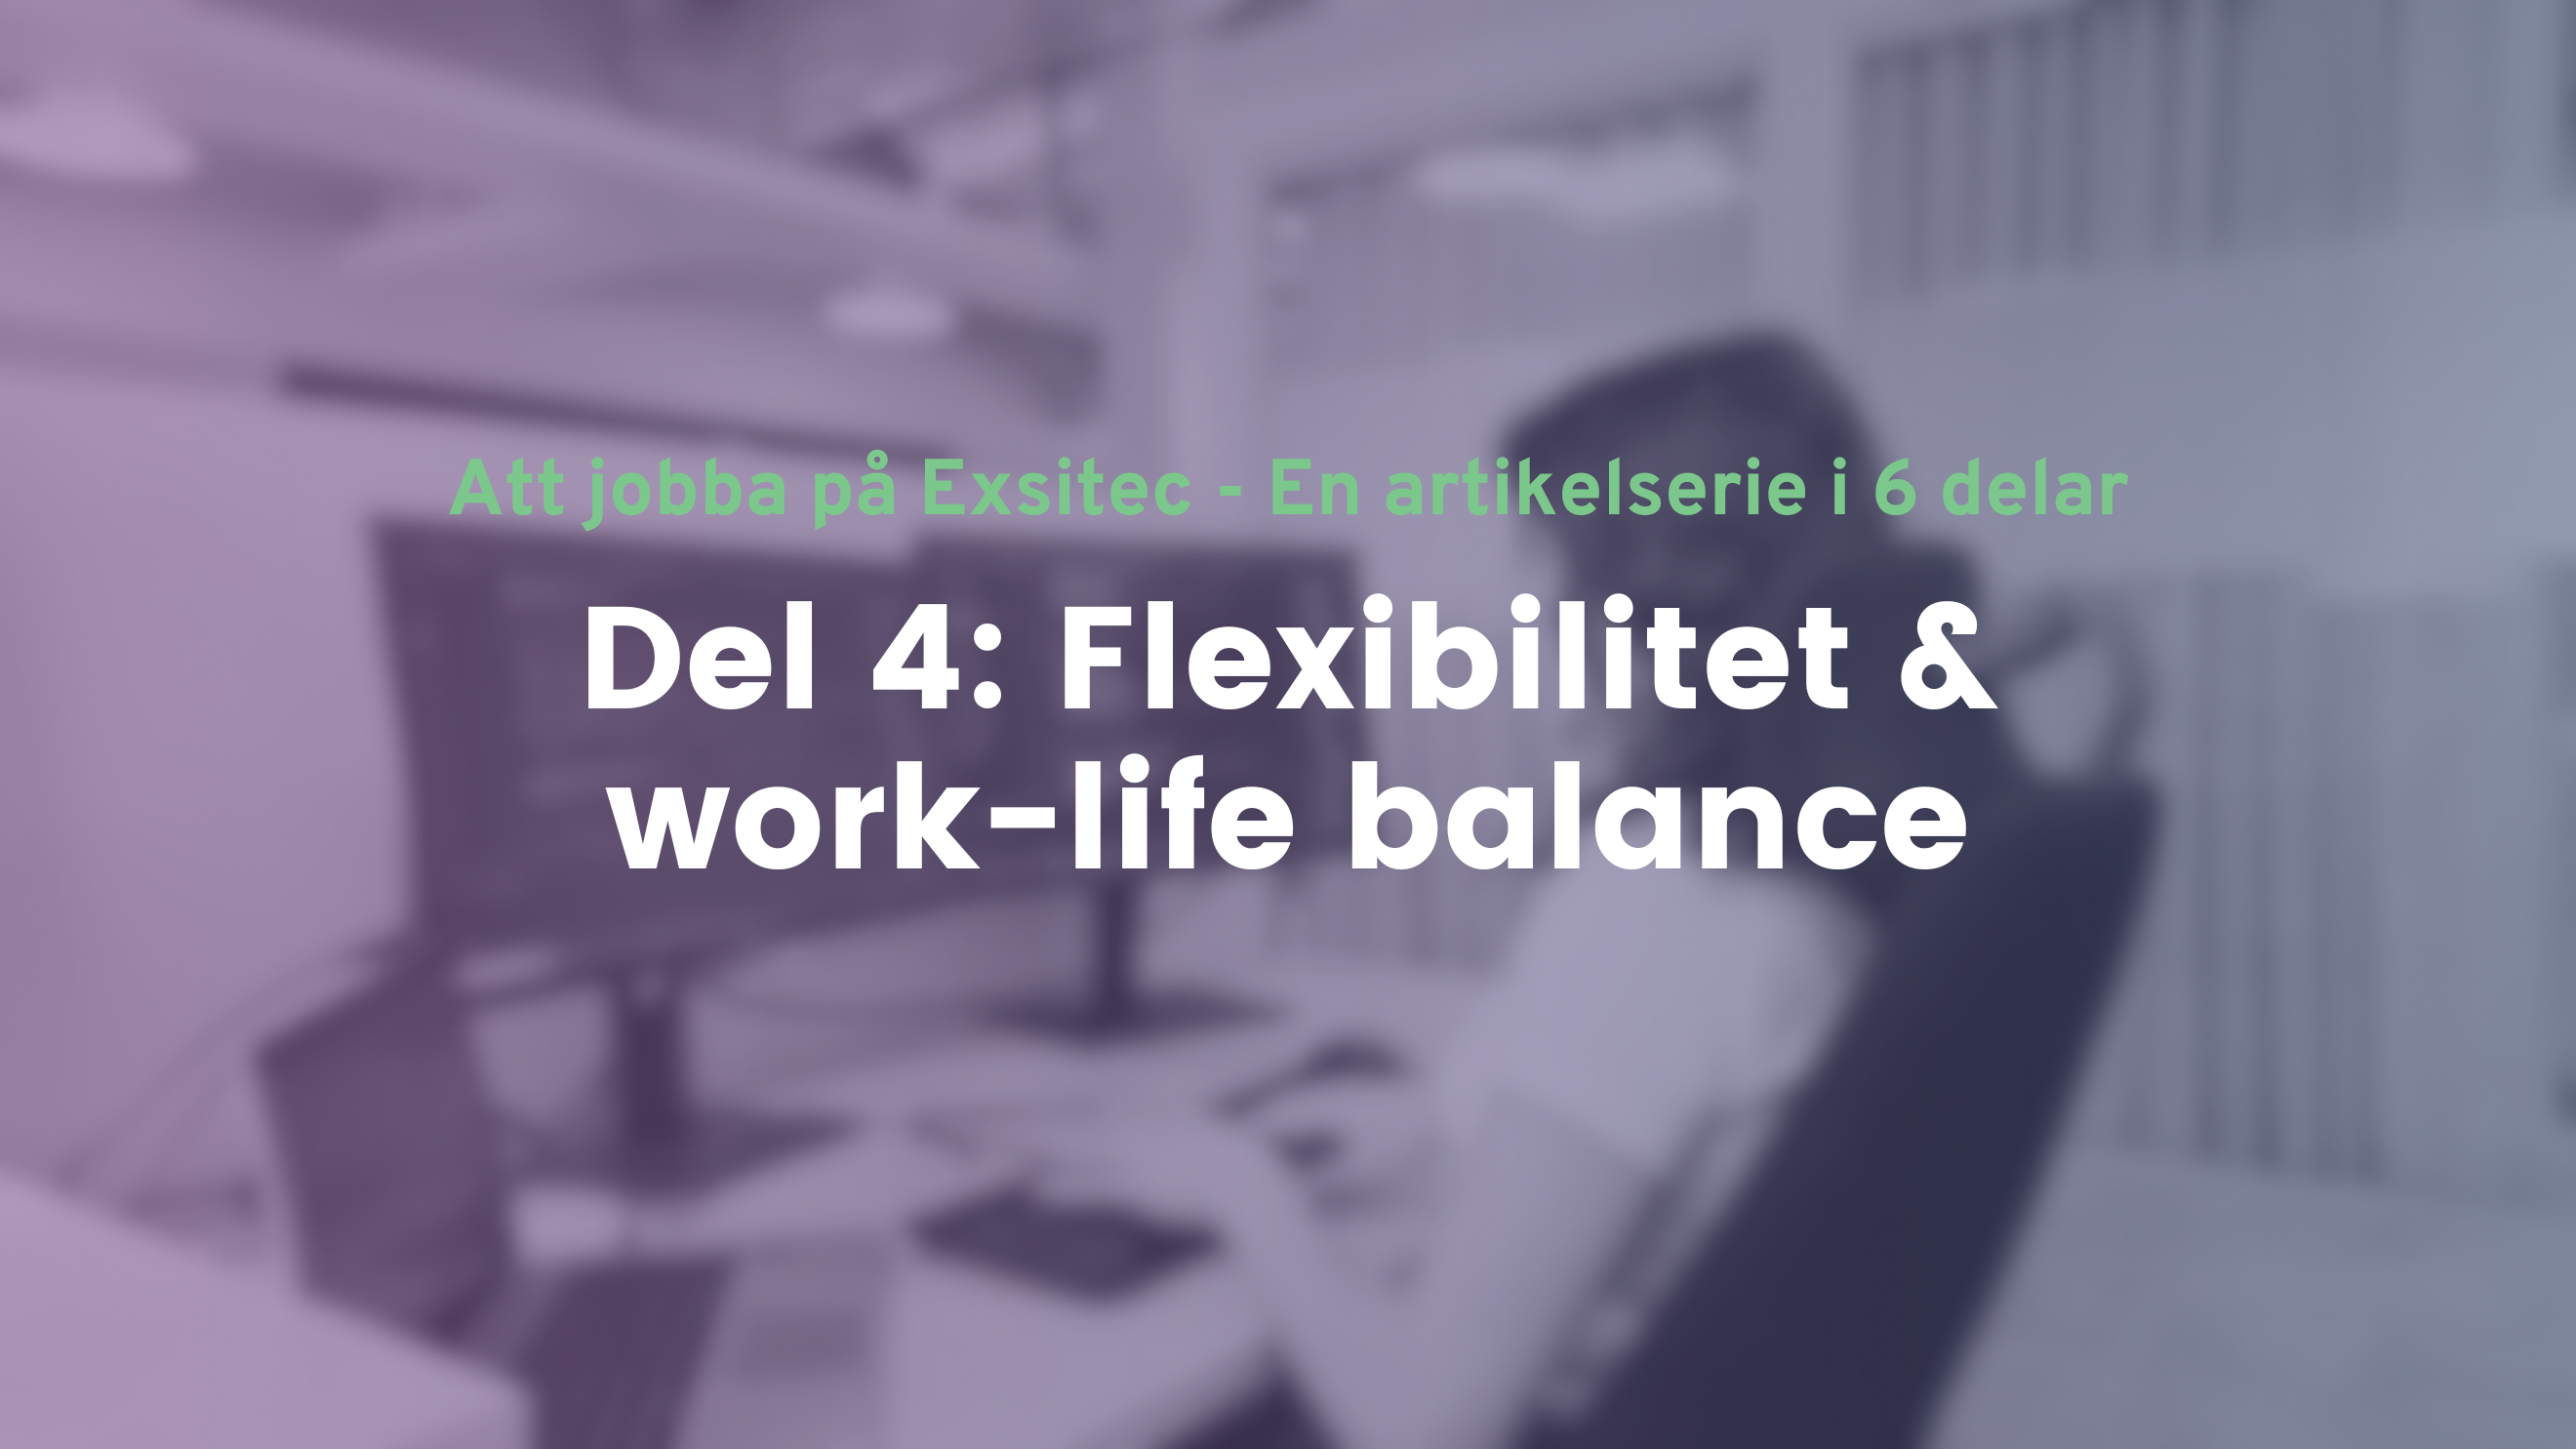 Flexibilitet & work-life balance